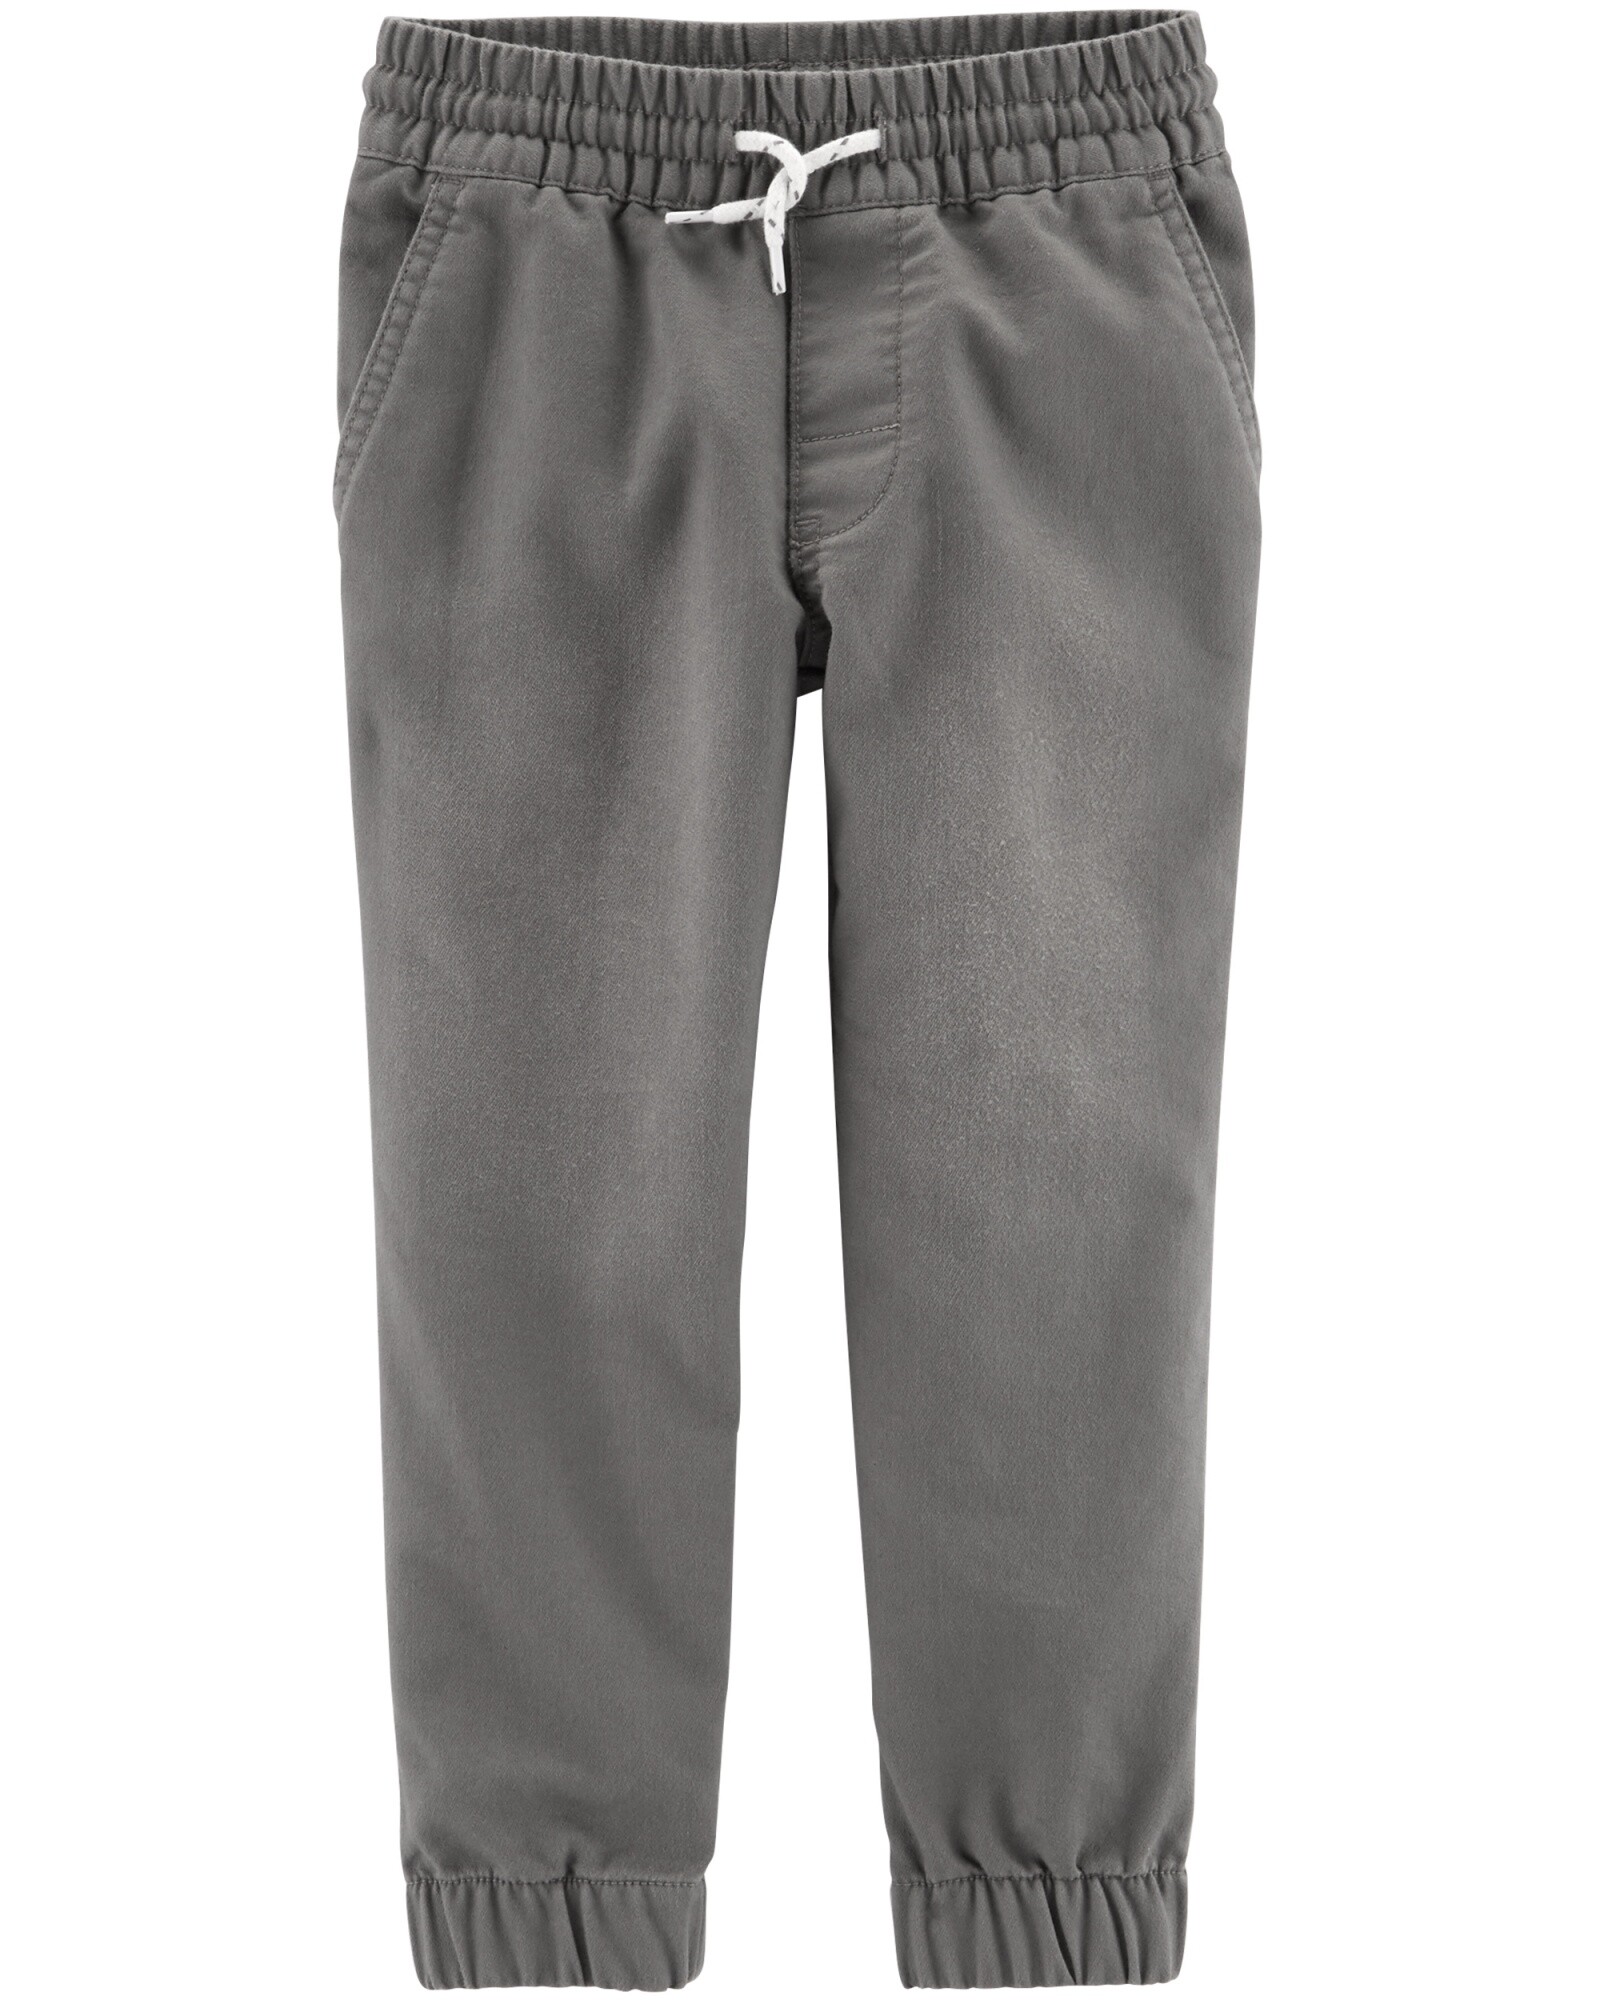 Pantalón deportivo de algodón, gris. Talles 2-5T Sin color